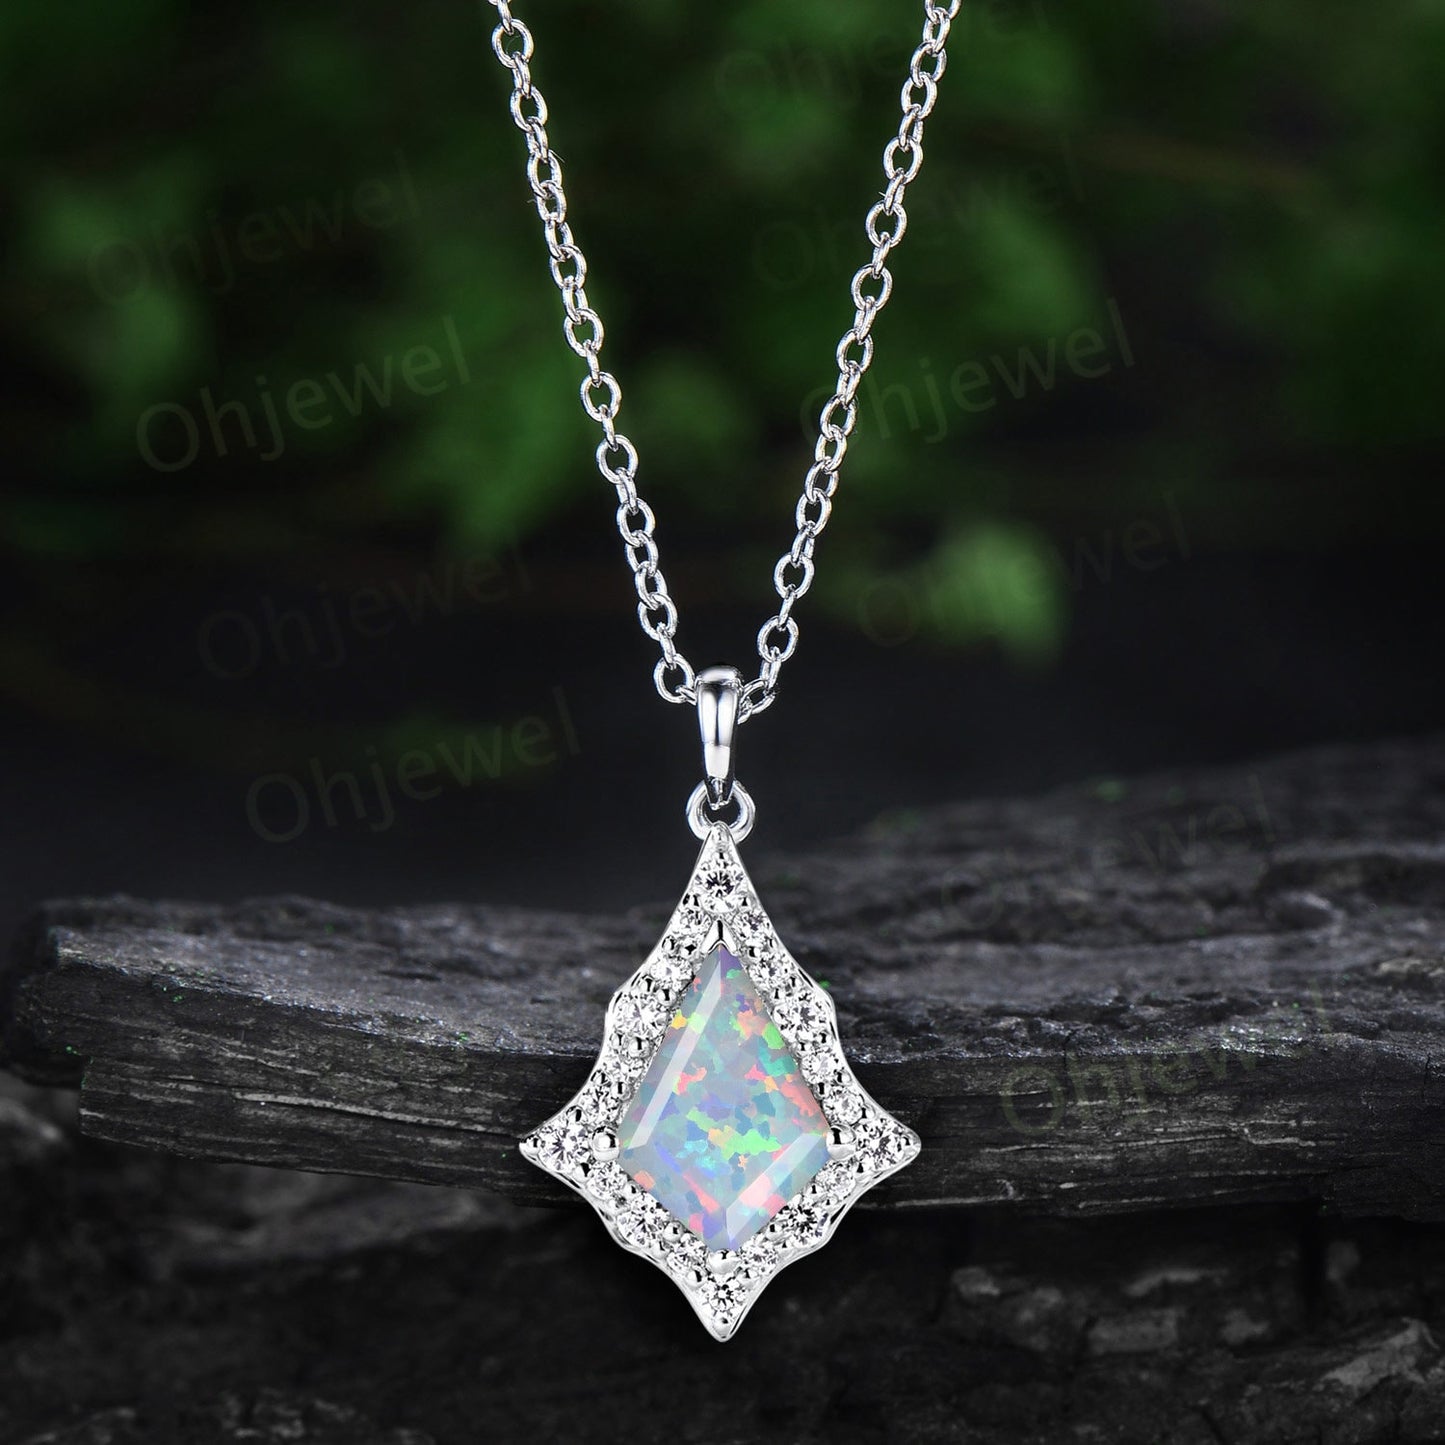 Vintage kite cut white opal necklace rose gold antique unique snowdrift halo diamond necklace Pendant women opal jewelry anniversary gift